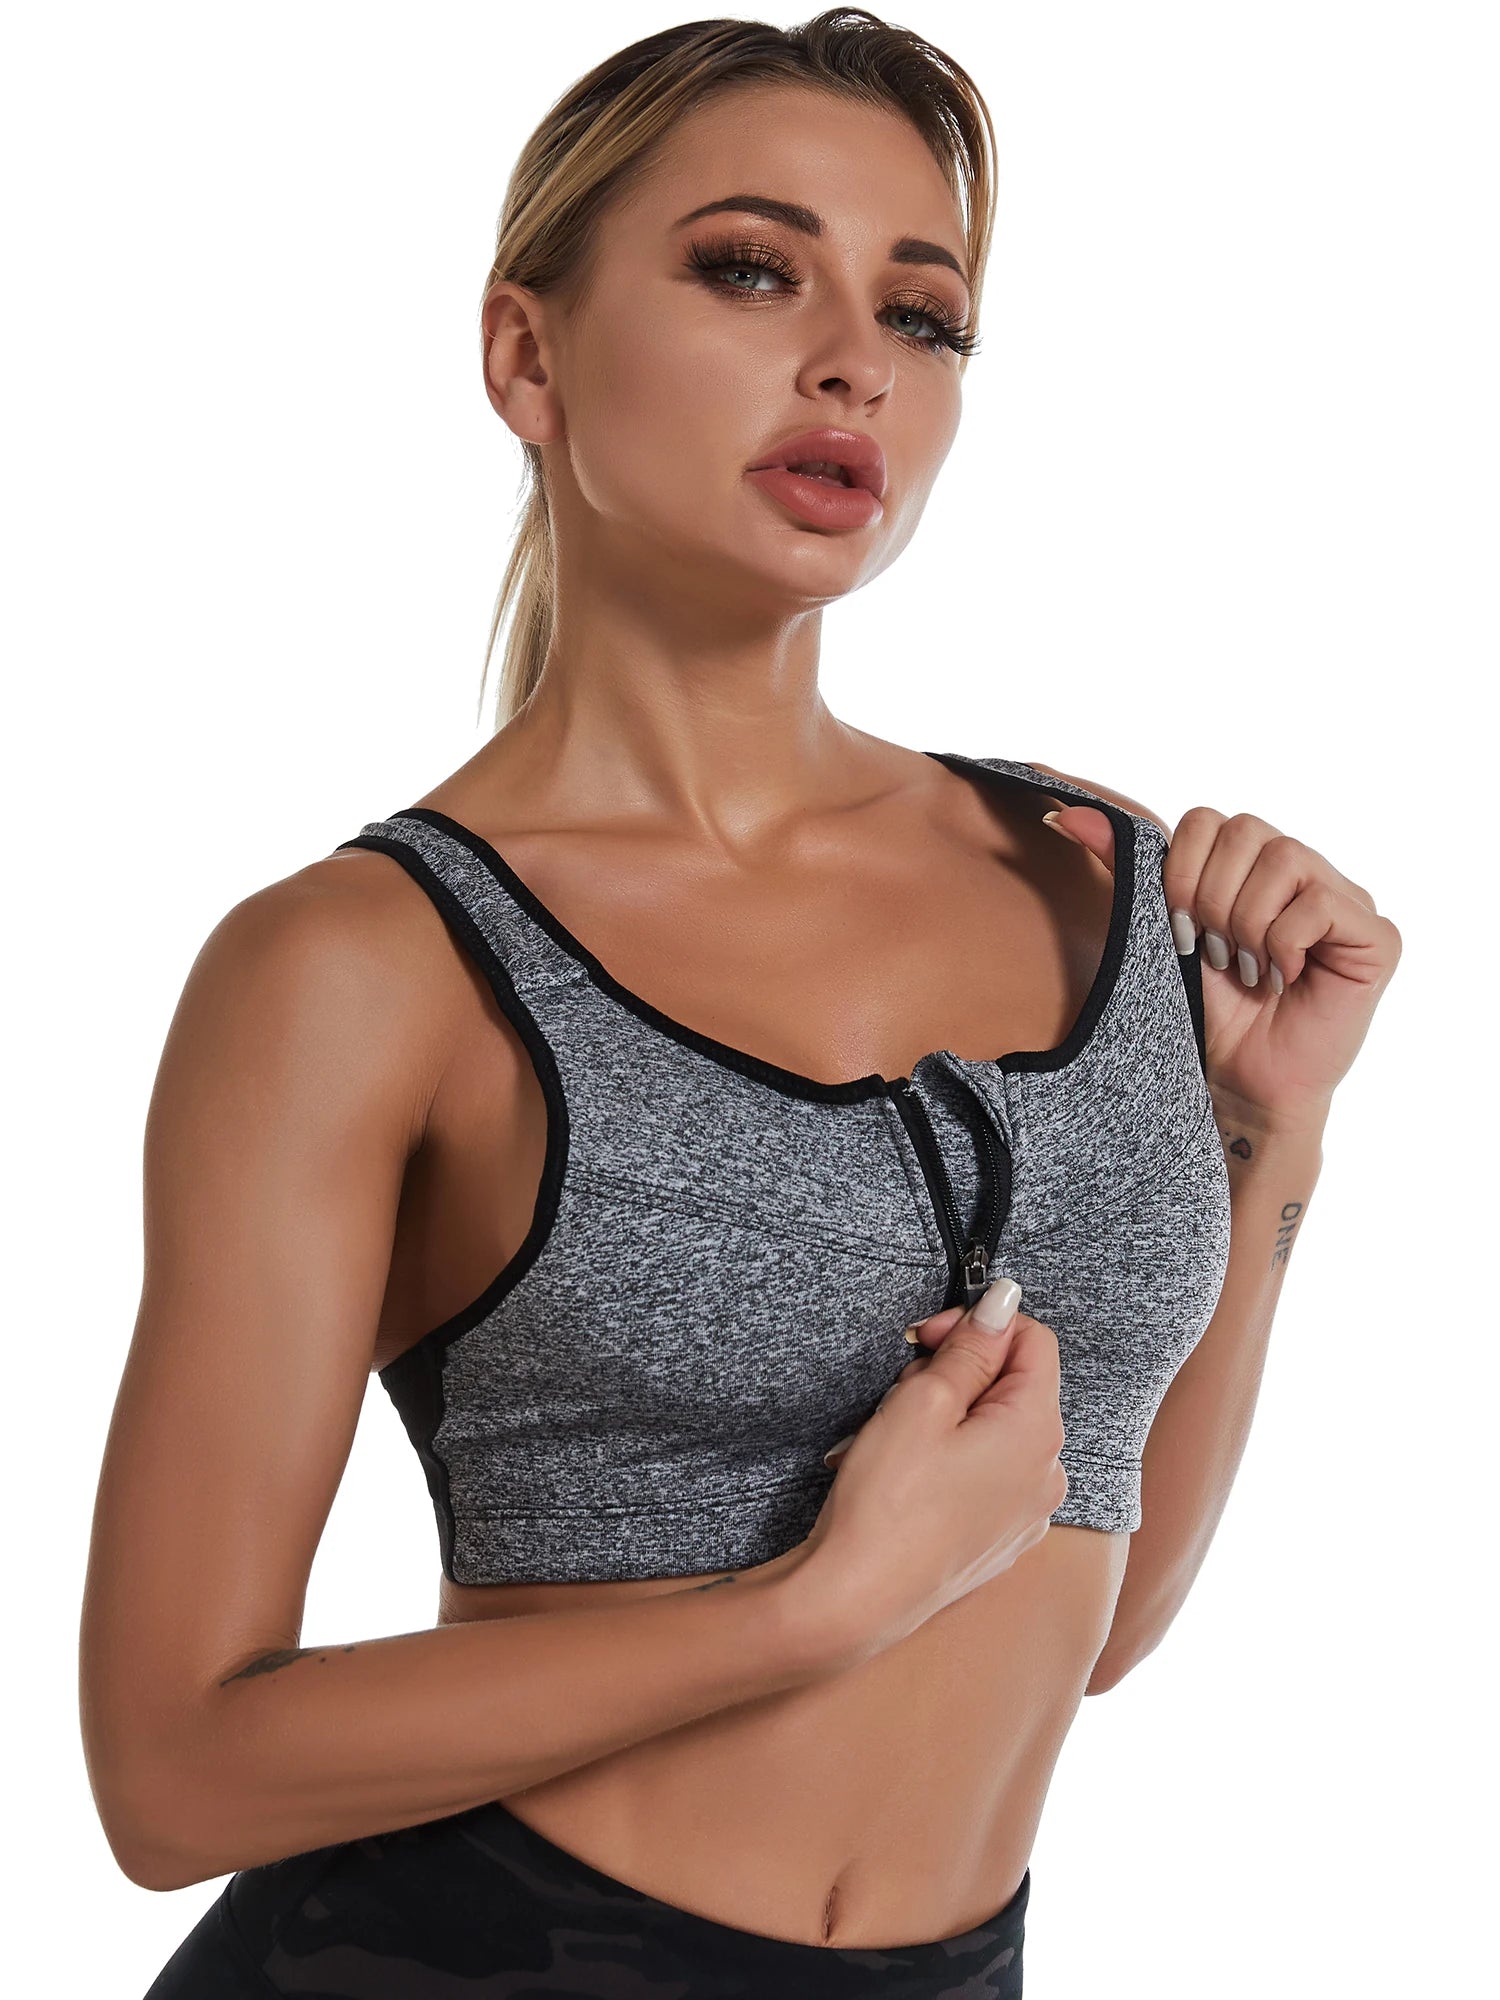 Women Front Zipper Sports Bra Plus size Shockproof Push Up Yoga Running Fitness Bralette Tank Women's Lingerie Underwear 5XL